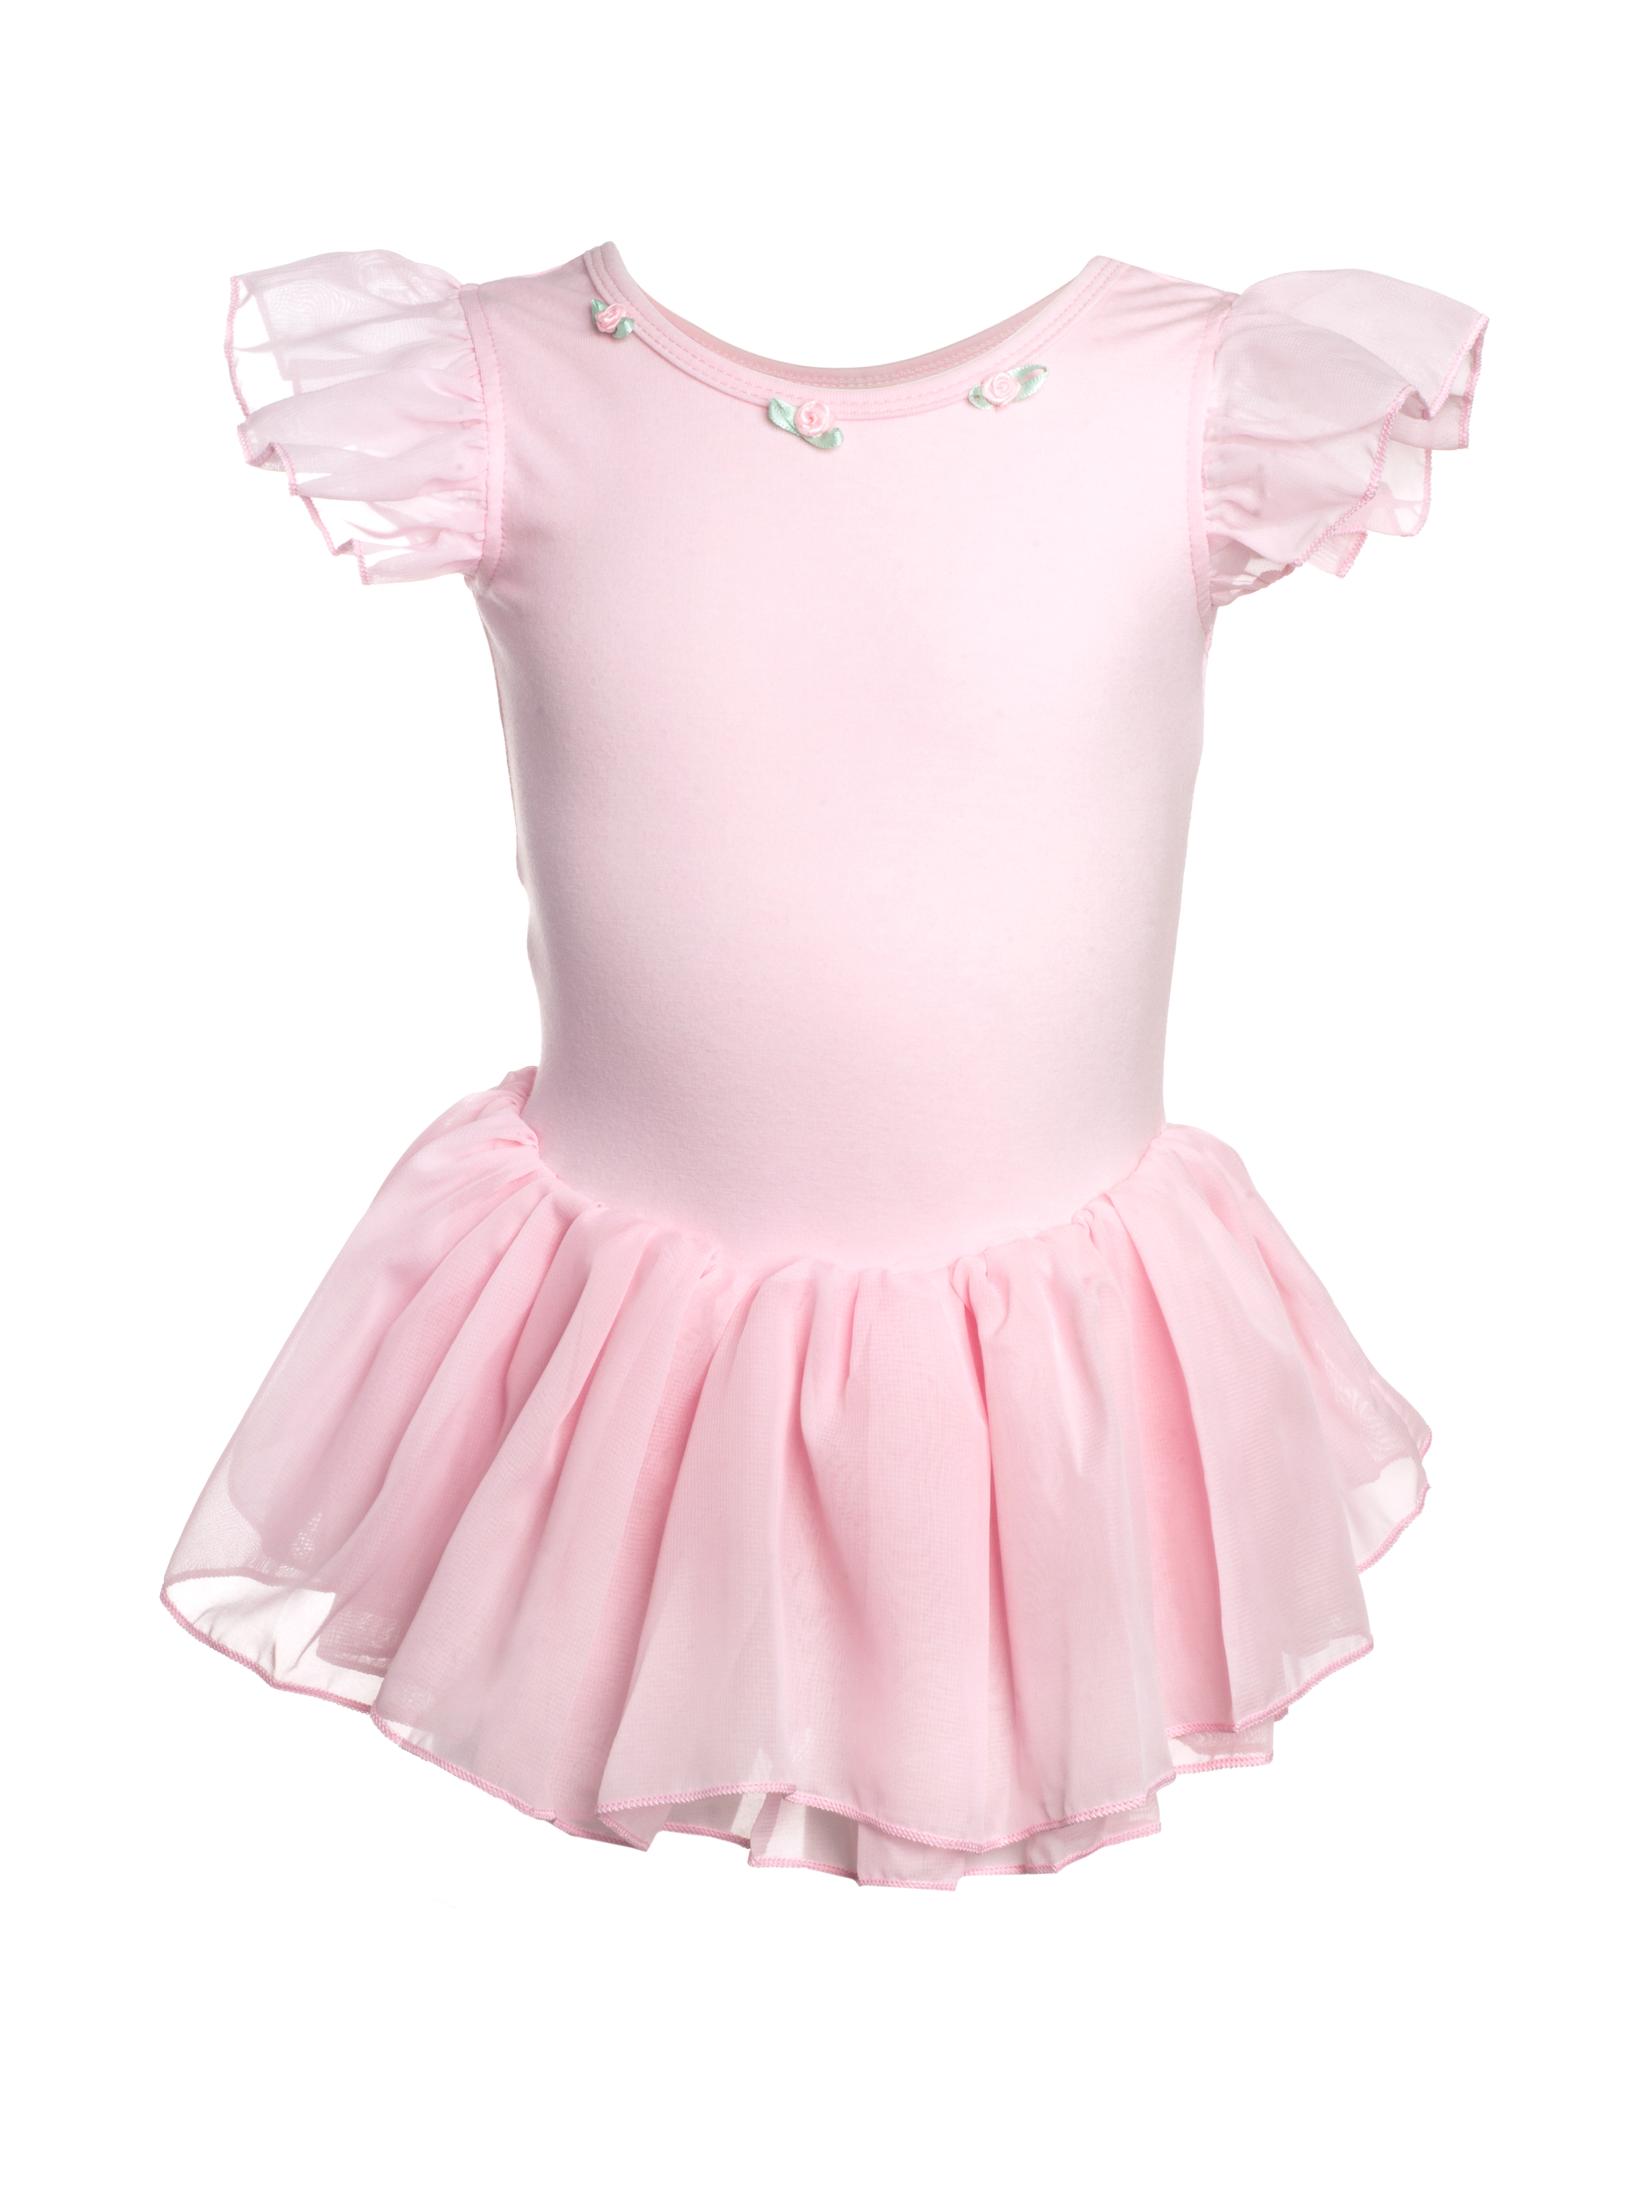 Selected image for GALA UNIQ Triko za balet sa suknicom za devojčice 1178P roze